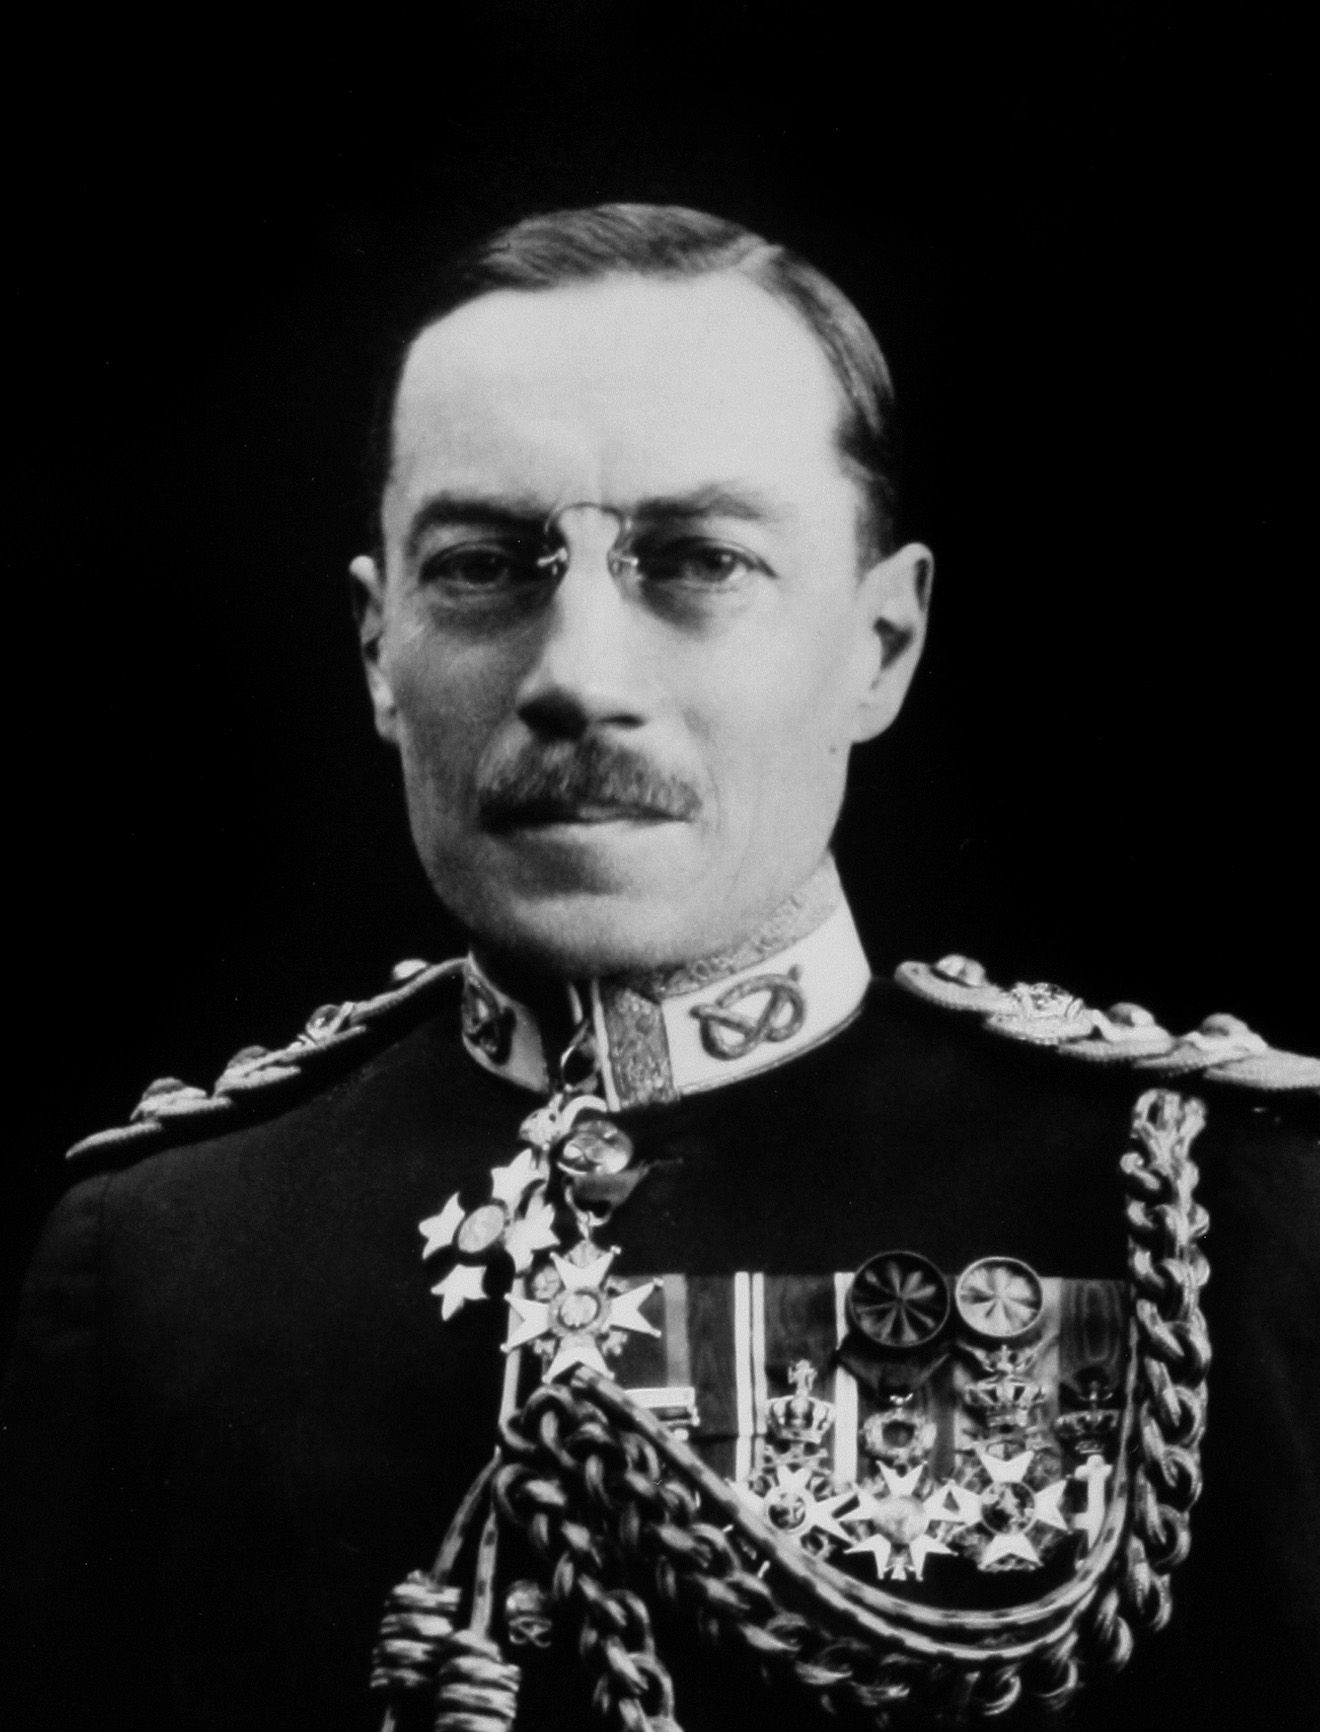 Portrait of Major-General Sir Vernon Kell